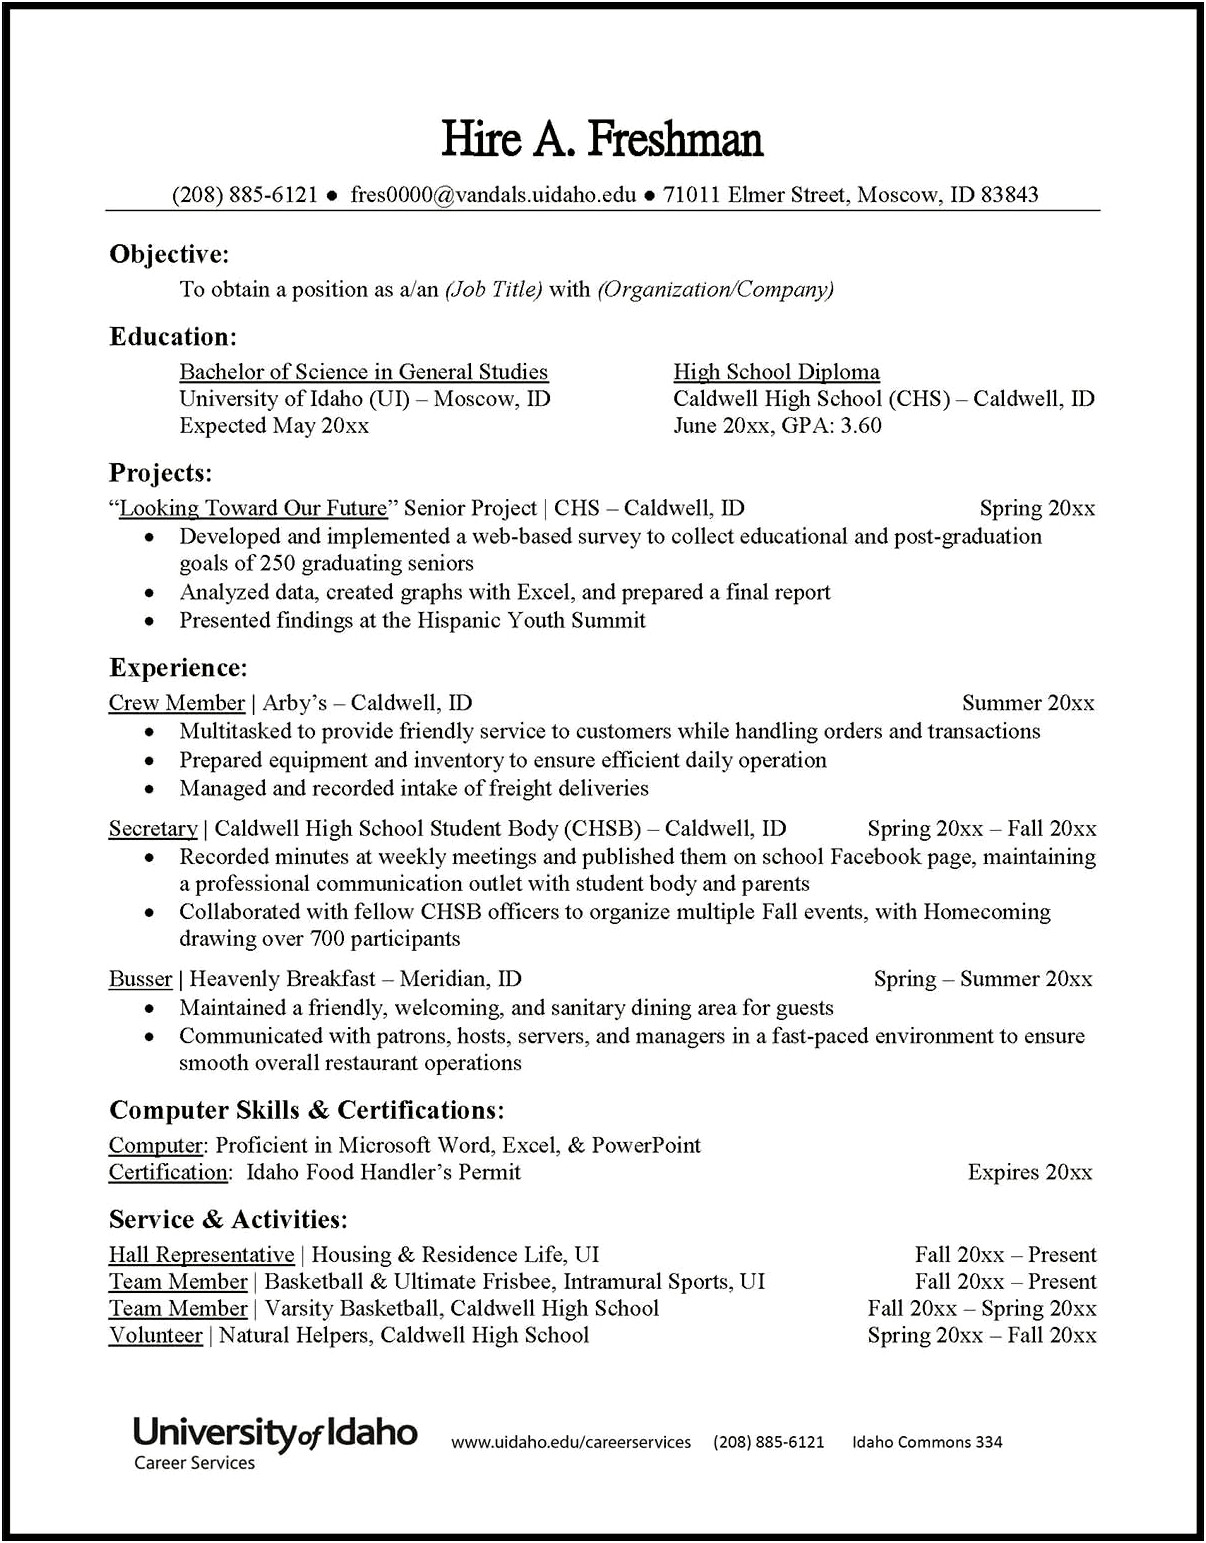 School Of Computer Science Sample Resume